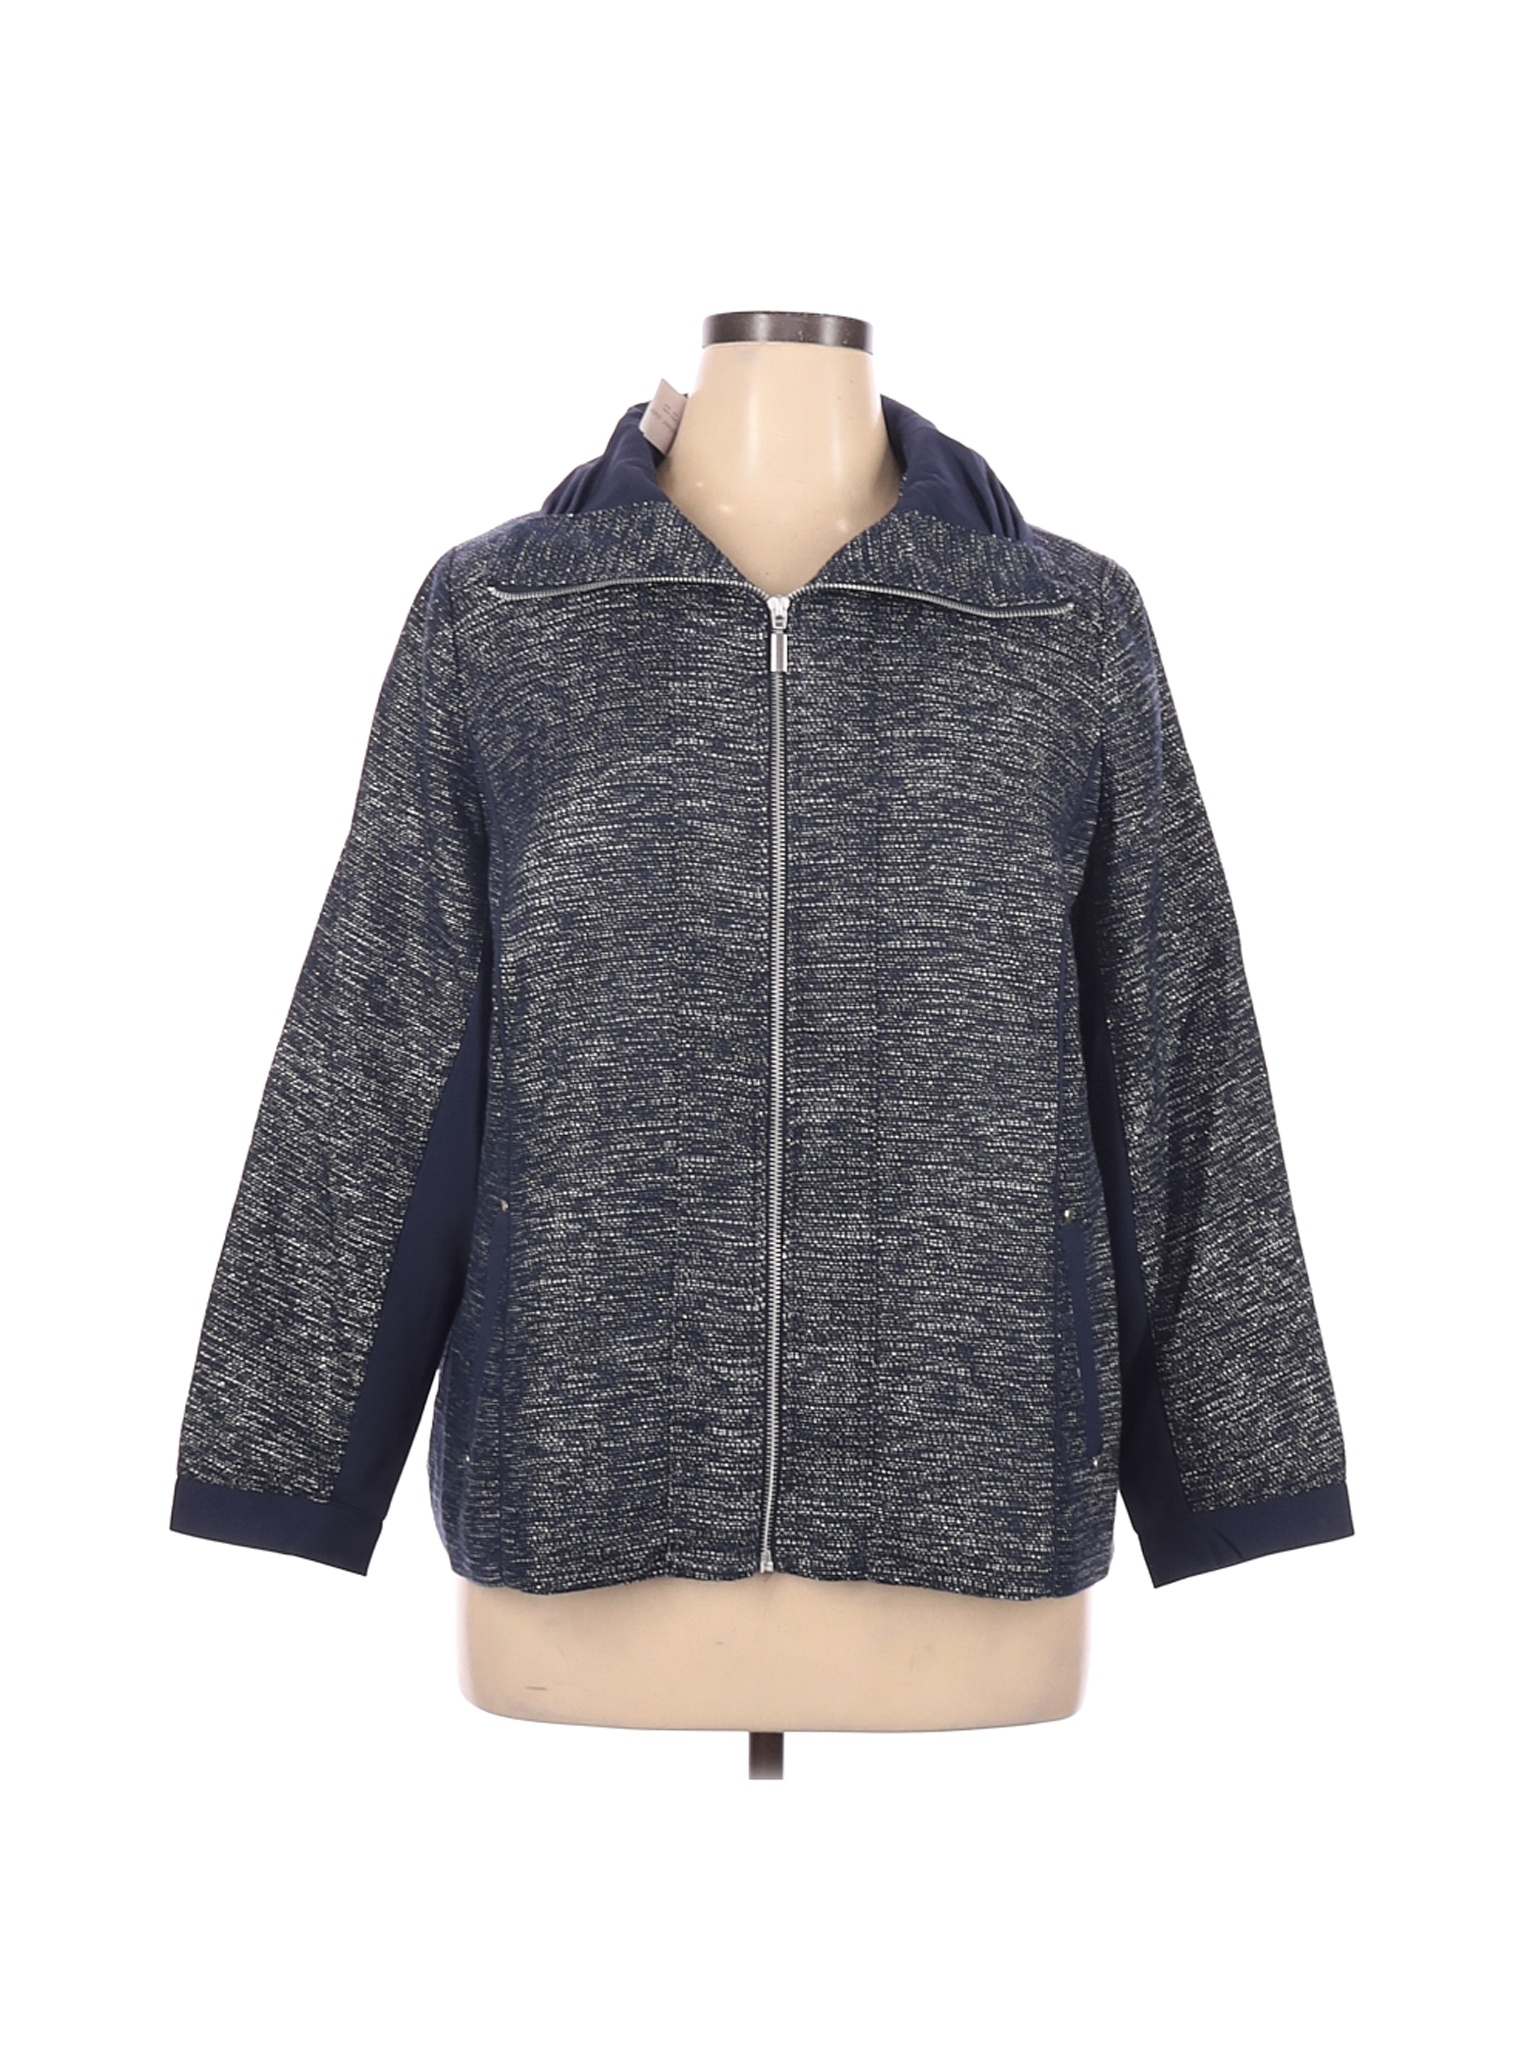 NWT Cj Banks Women Gray Jacket XL | eBay